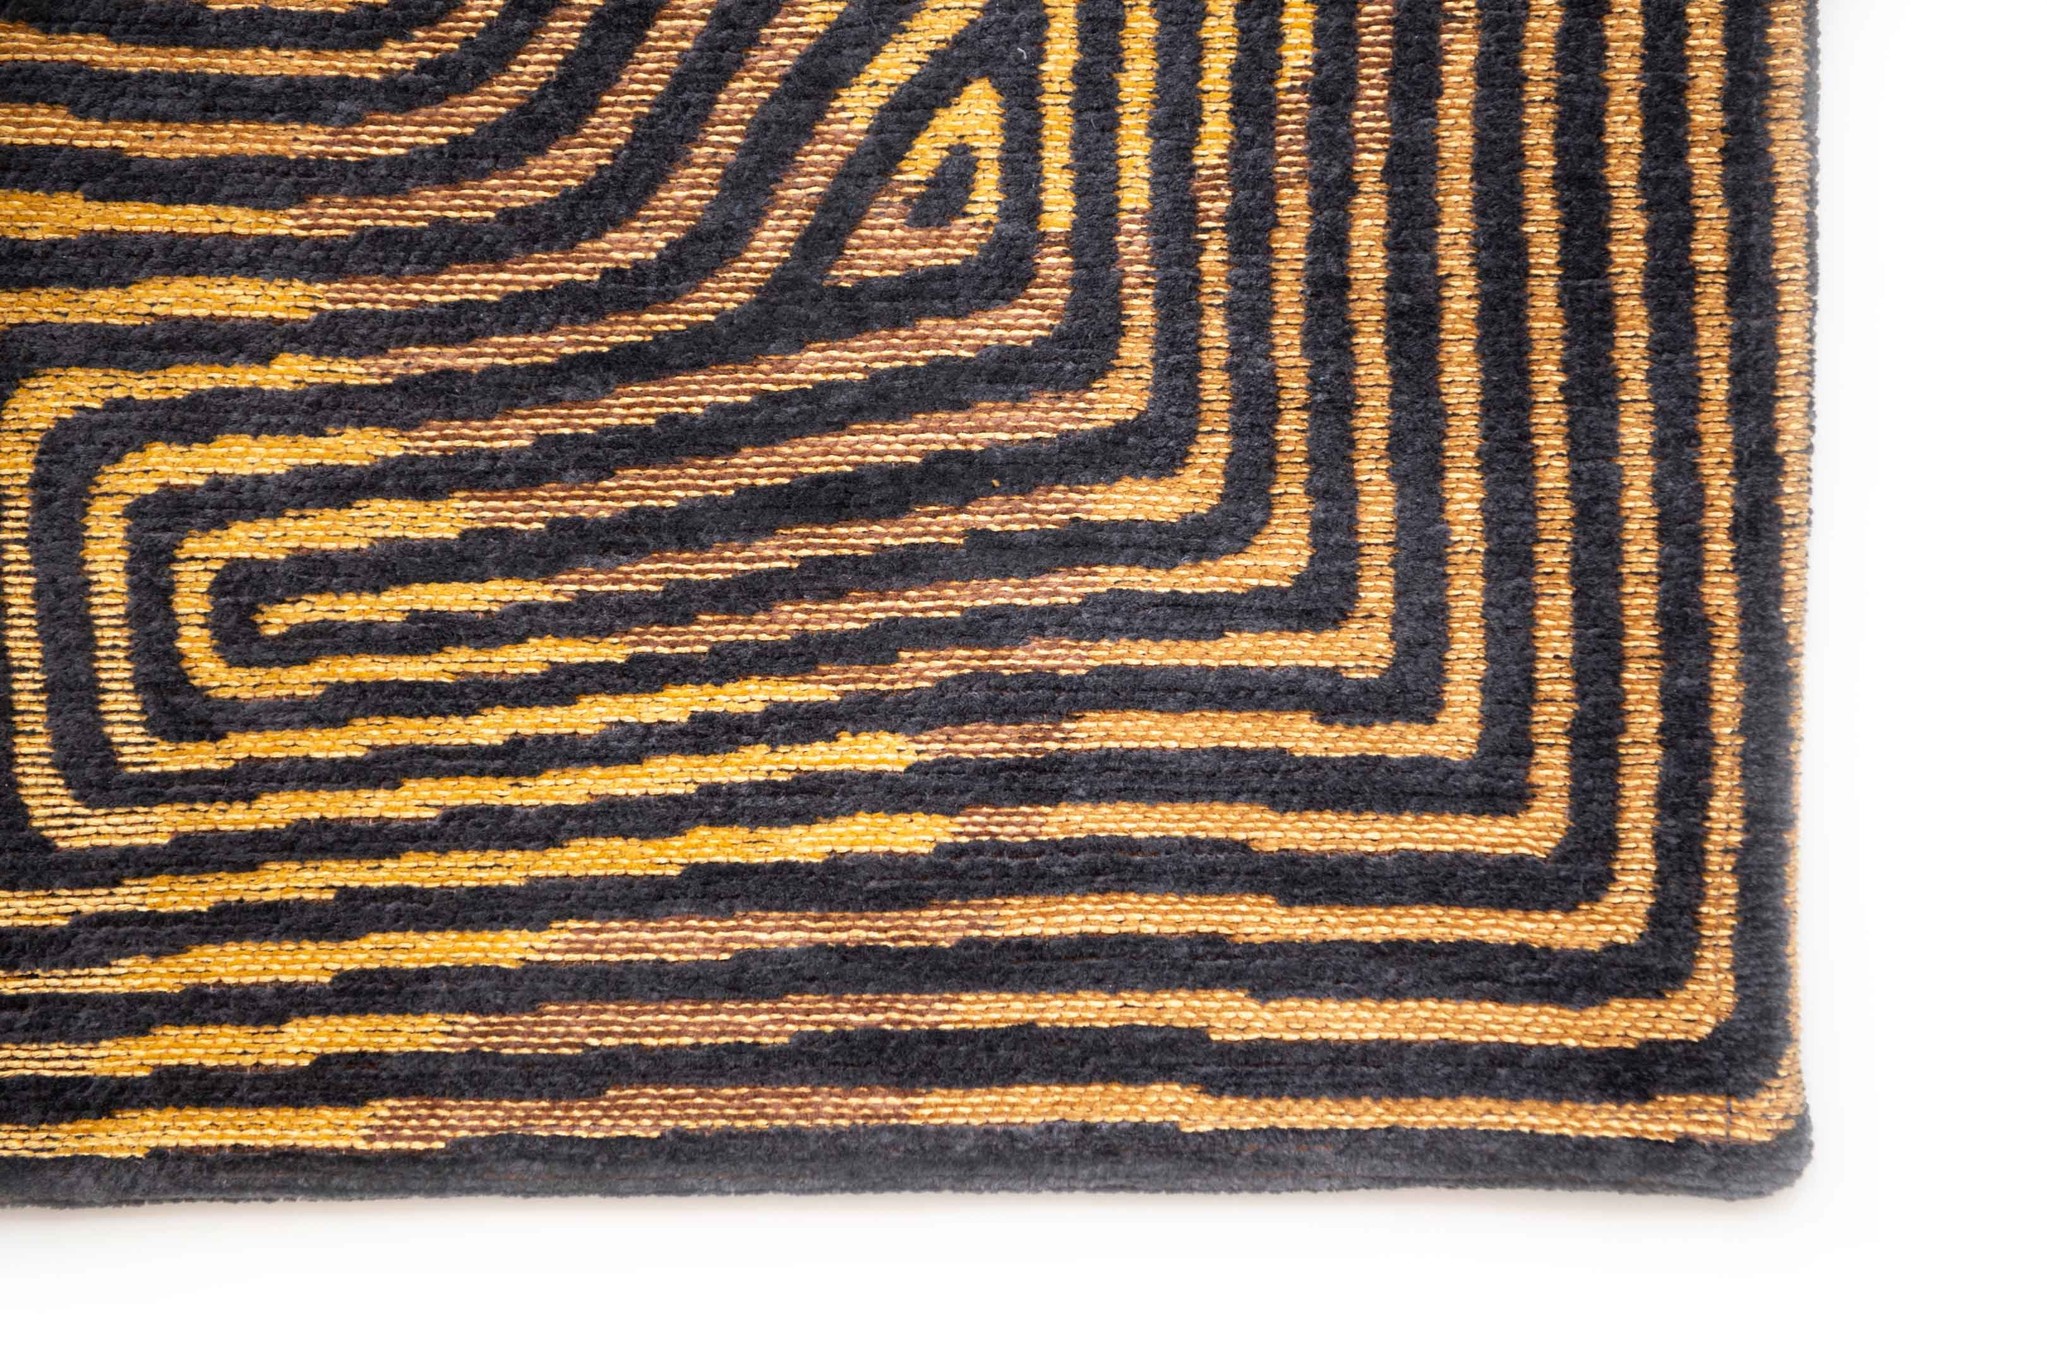 Black Gold Flatwoven Rug ☞ Size: 5' 7" x 8' (170 x 240 cm)